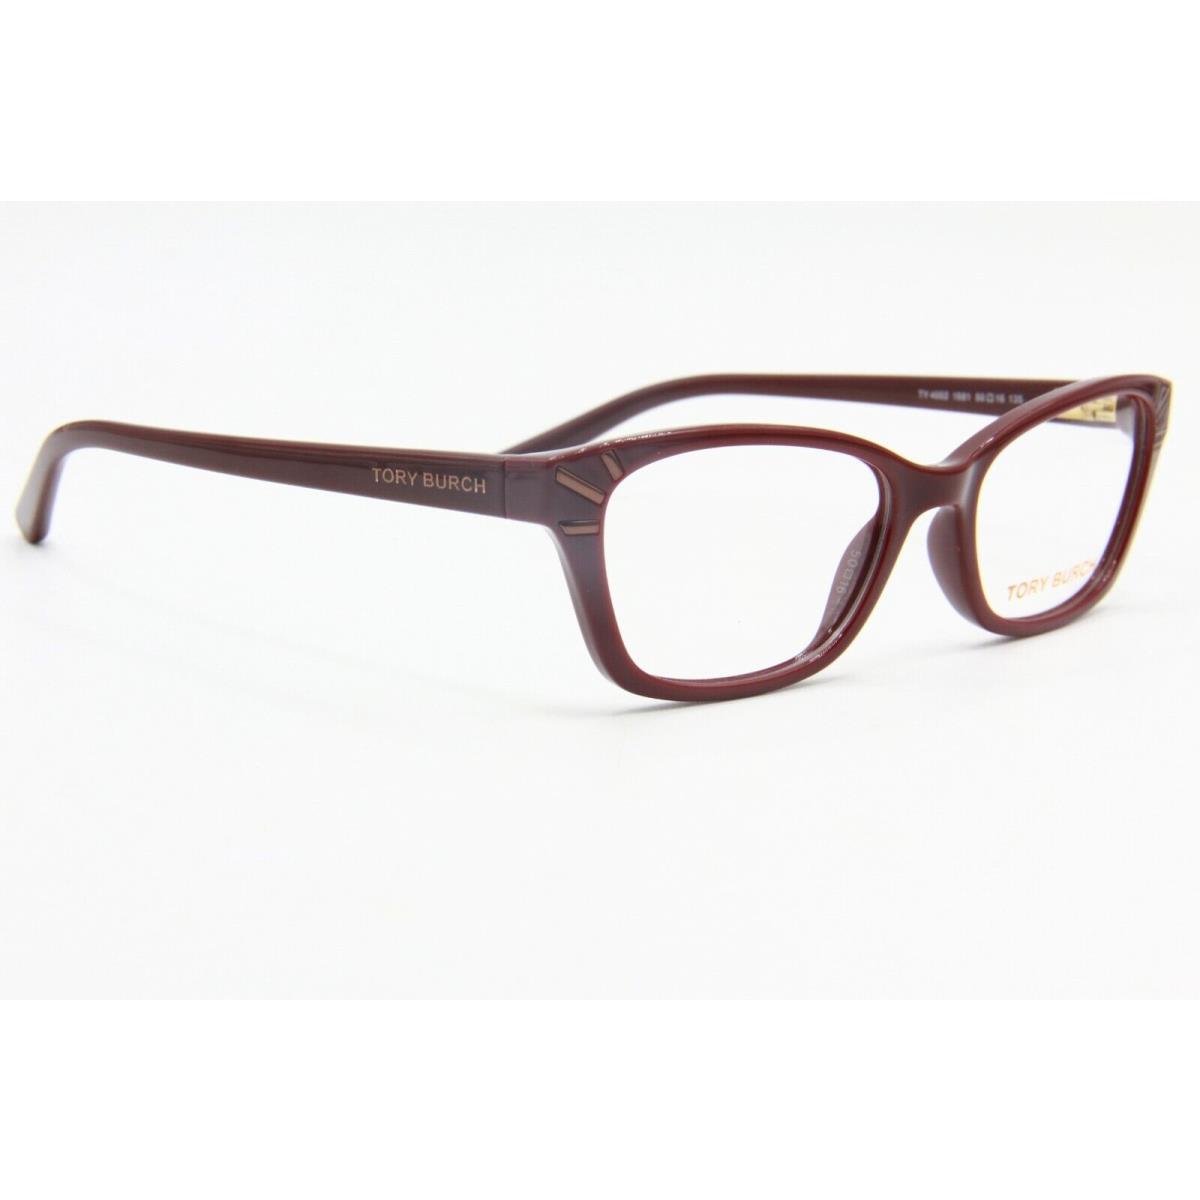 Tory Burch eyeglasses  - Frame: Red 1